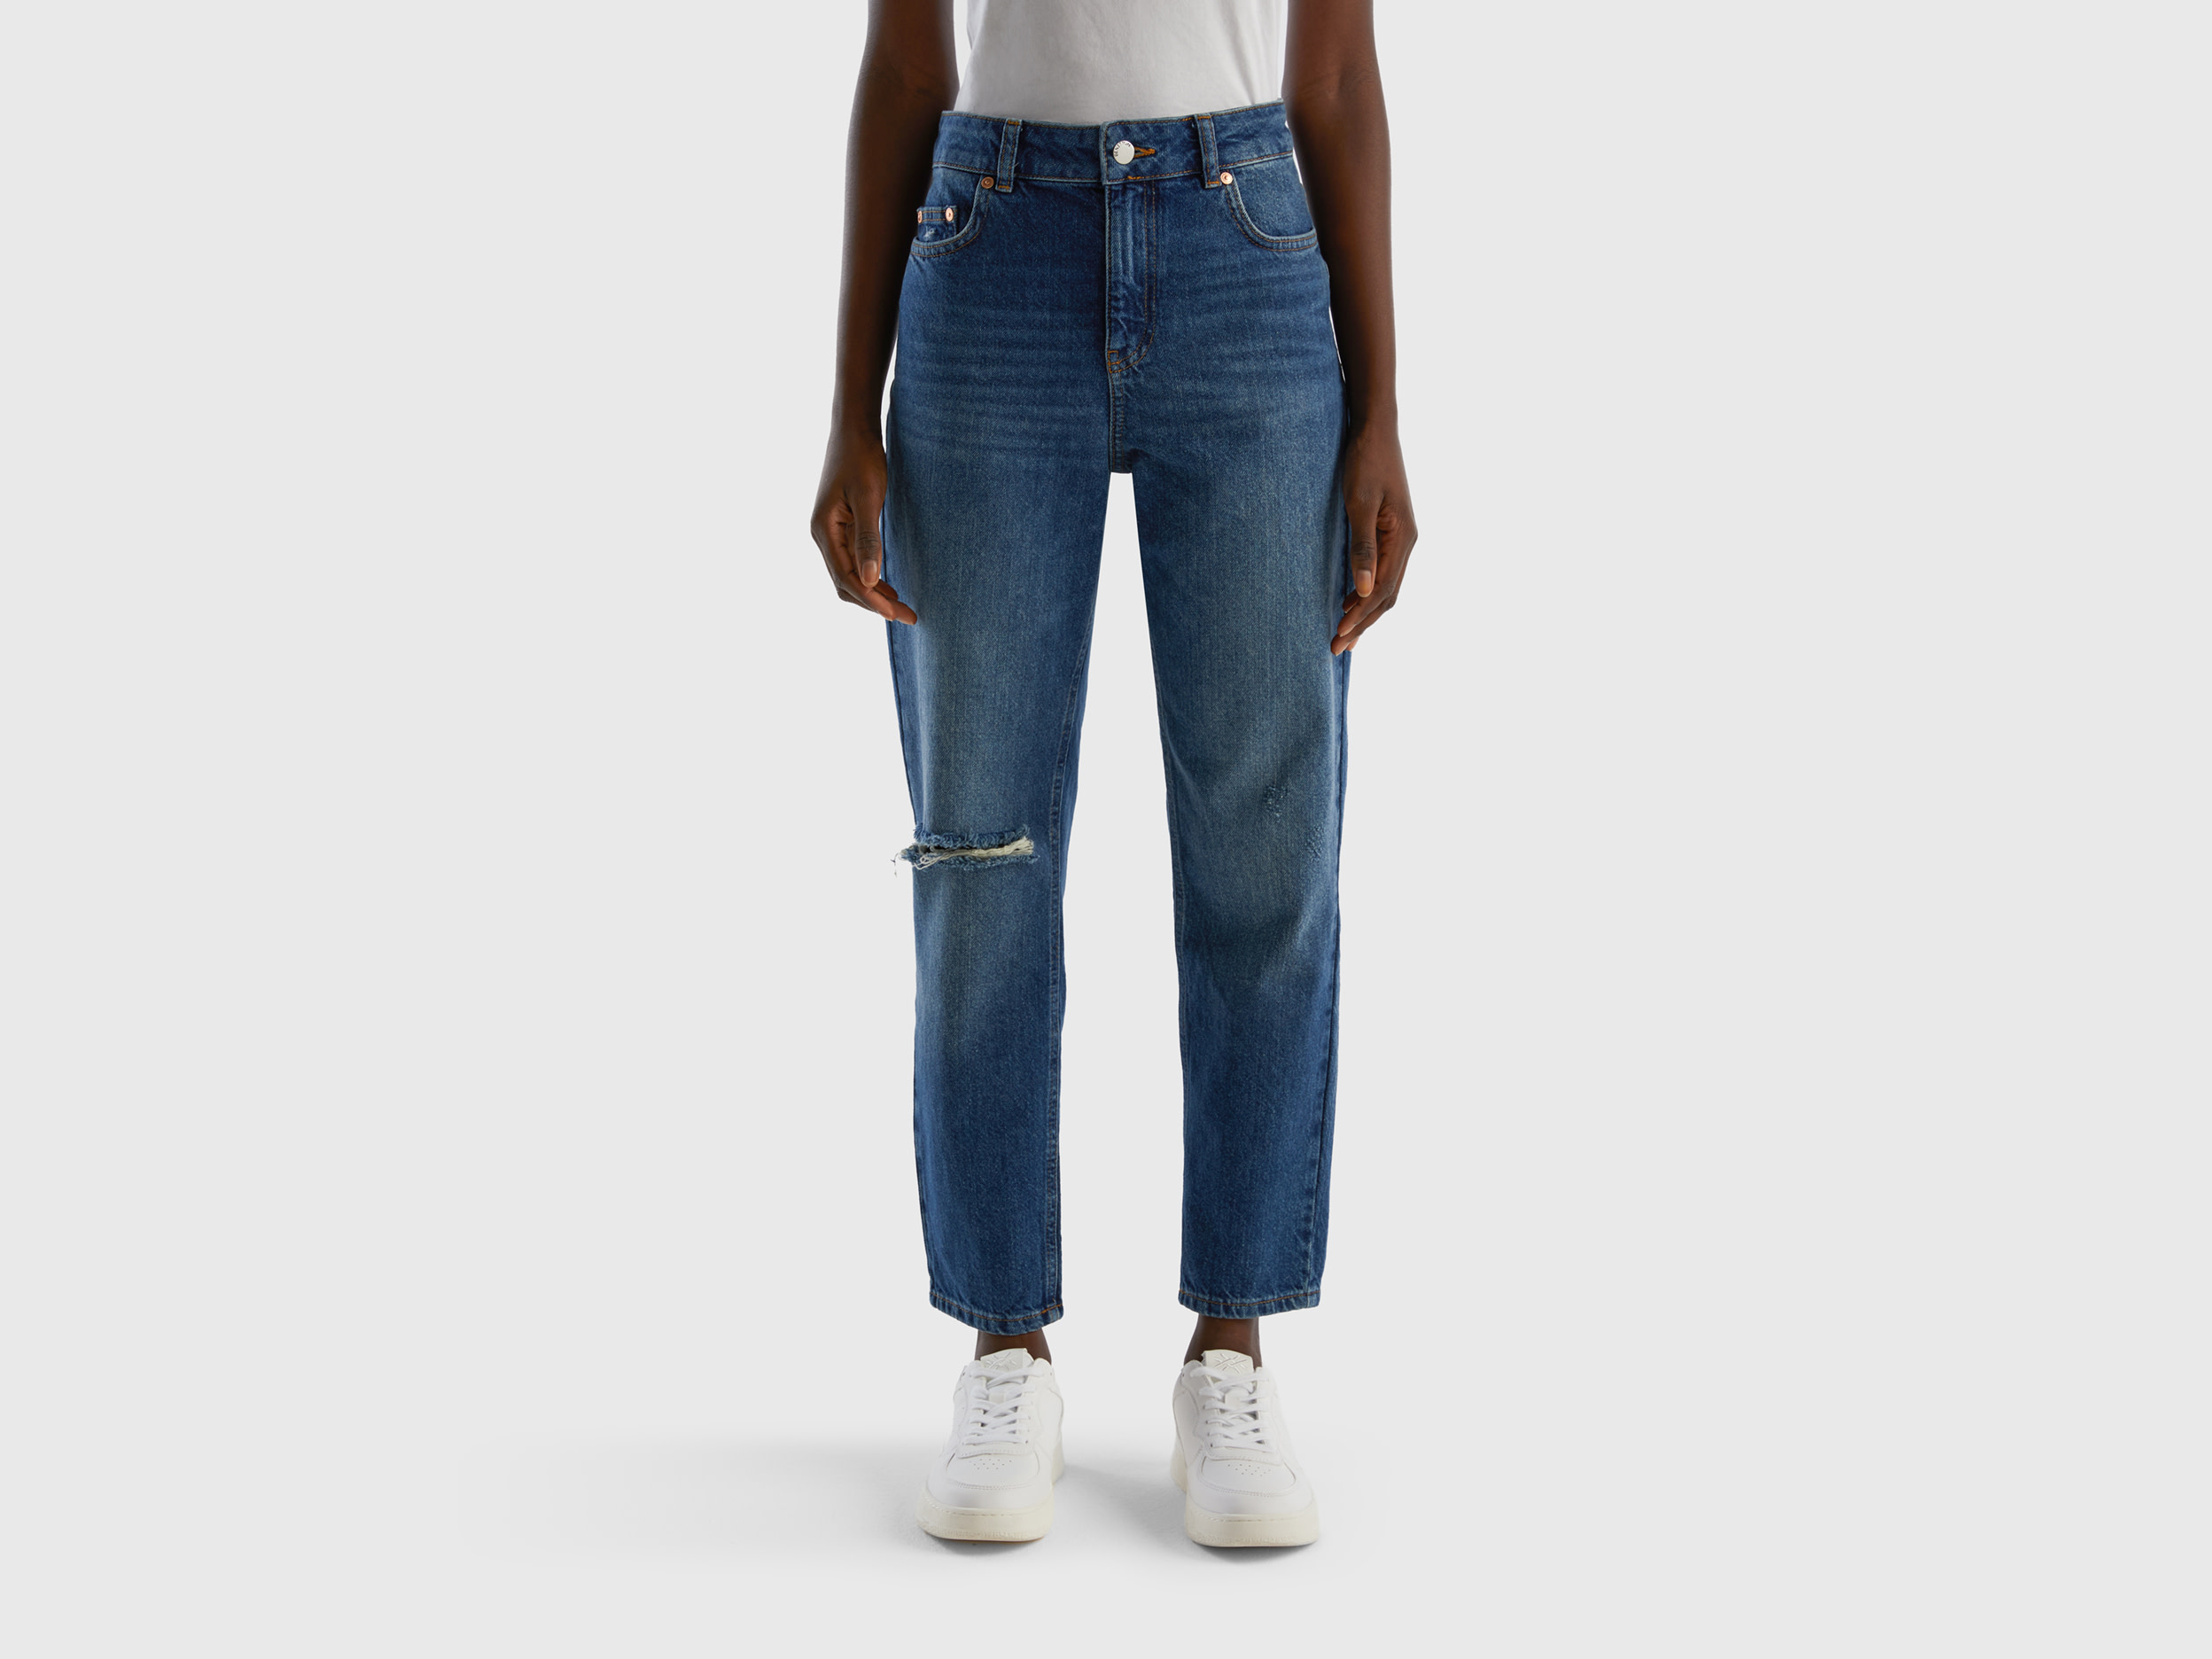 Benetton, Cropped High-waisted Jeans, size 29, Dark Blue, Women